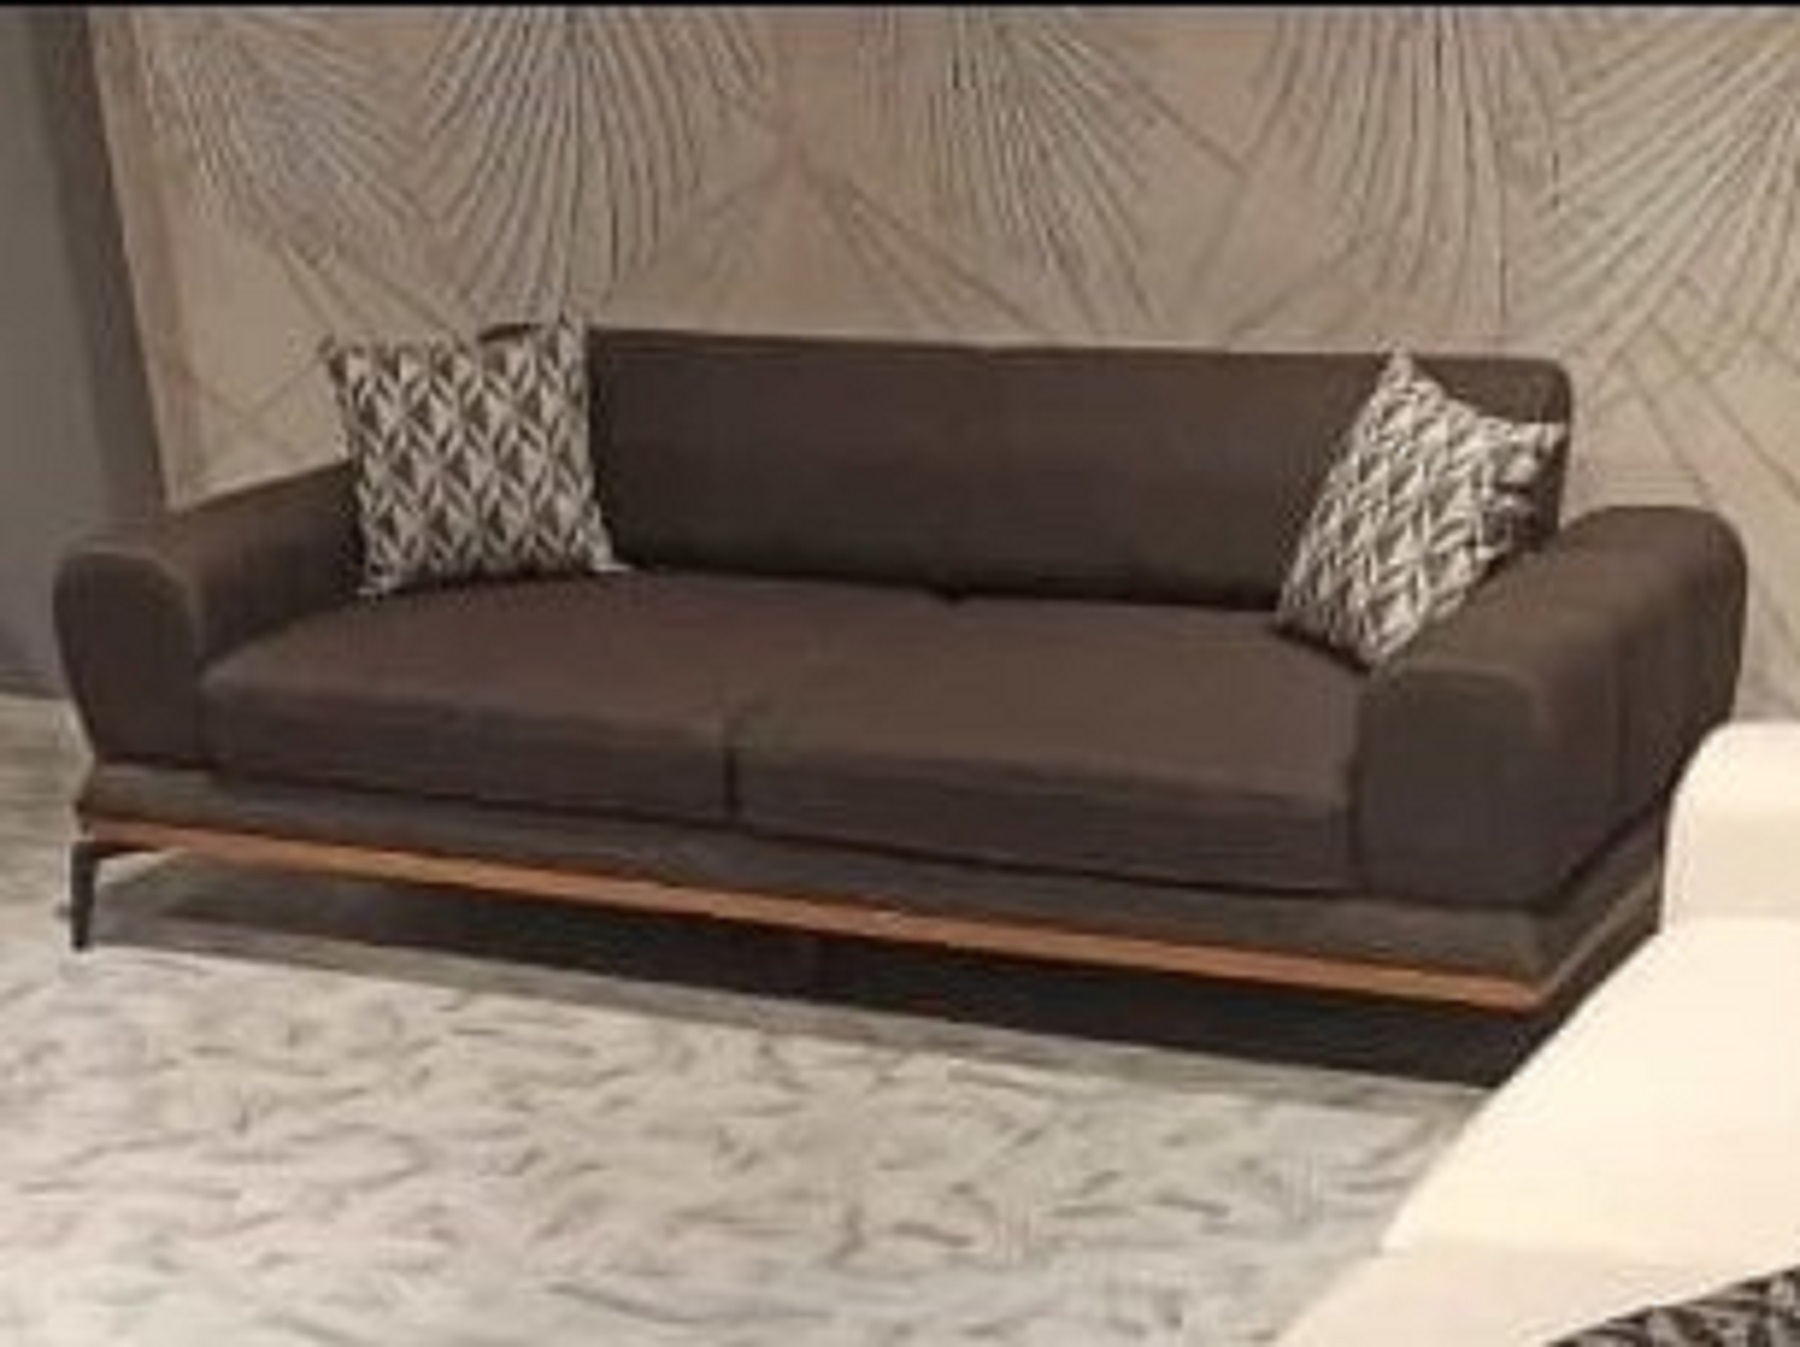 Hira Metalic Sofa with Bed Metal Leg